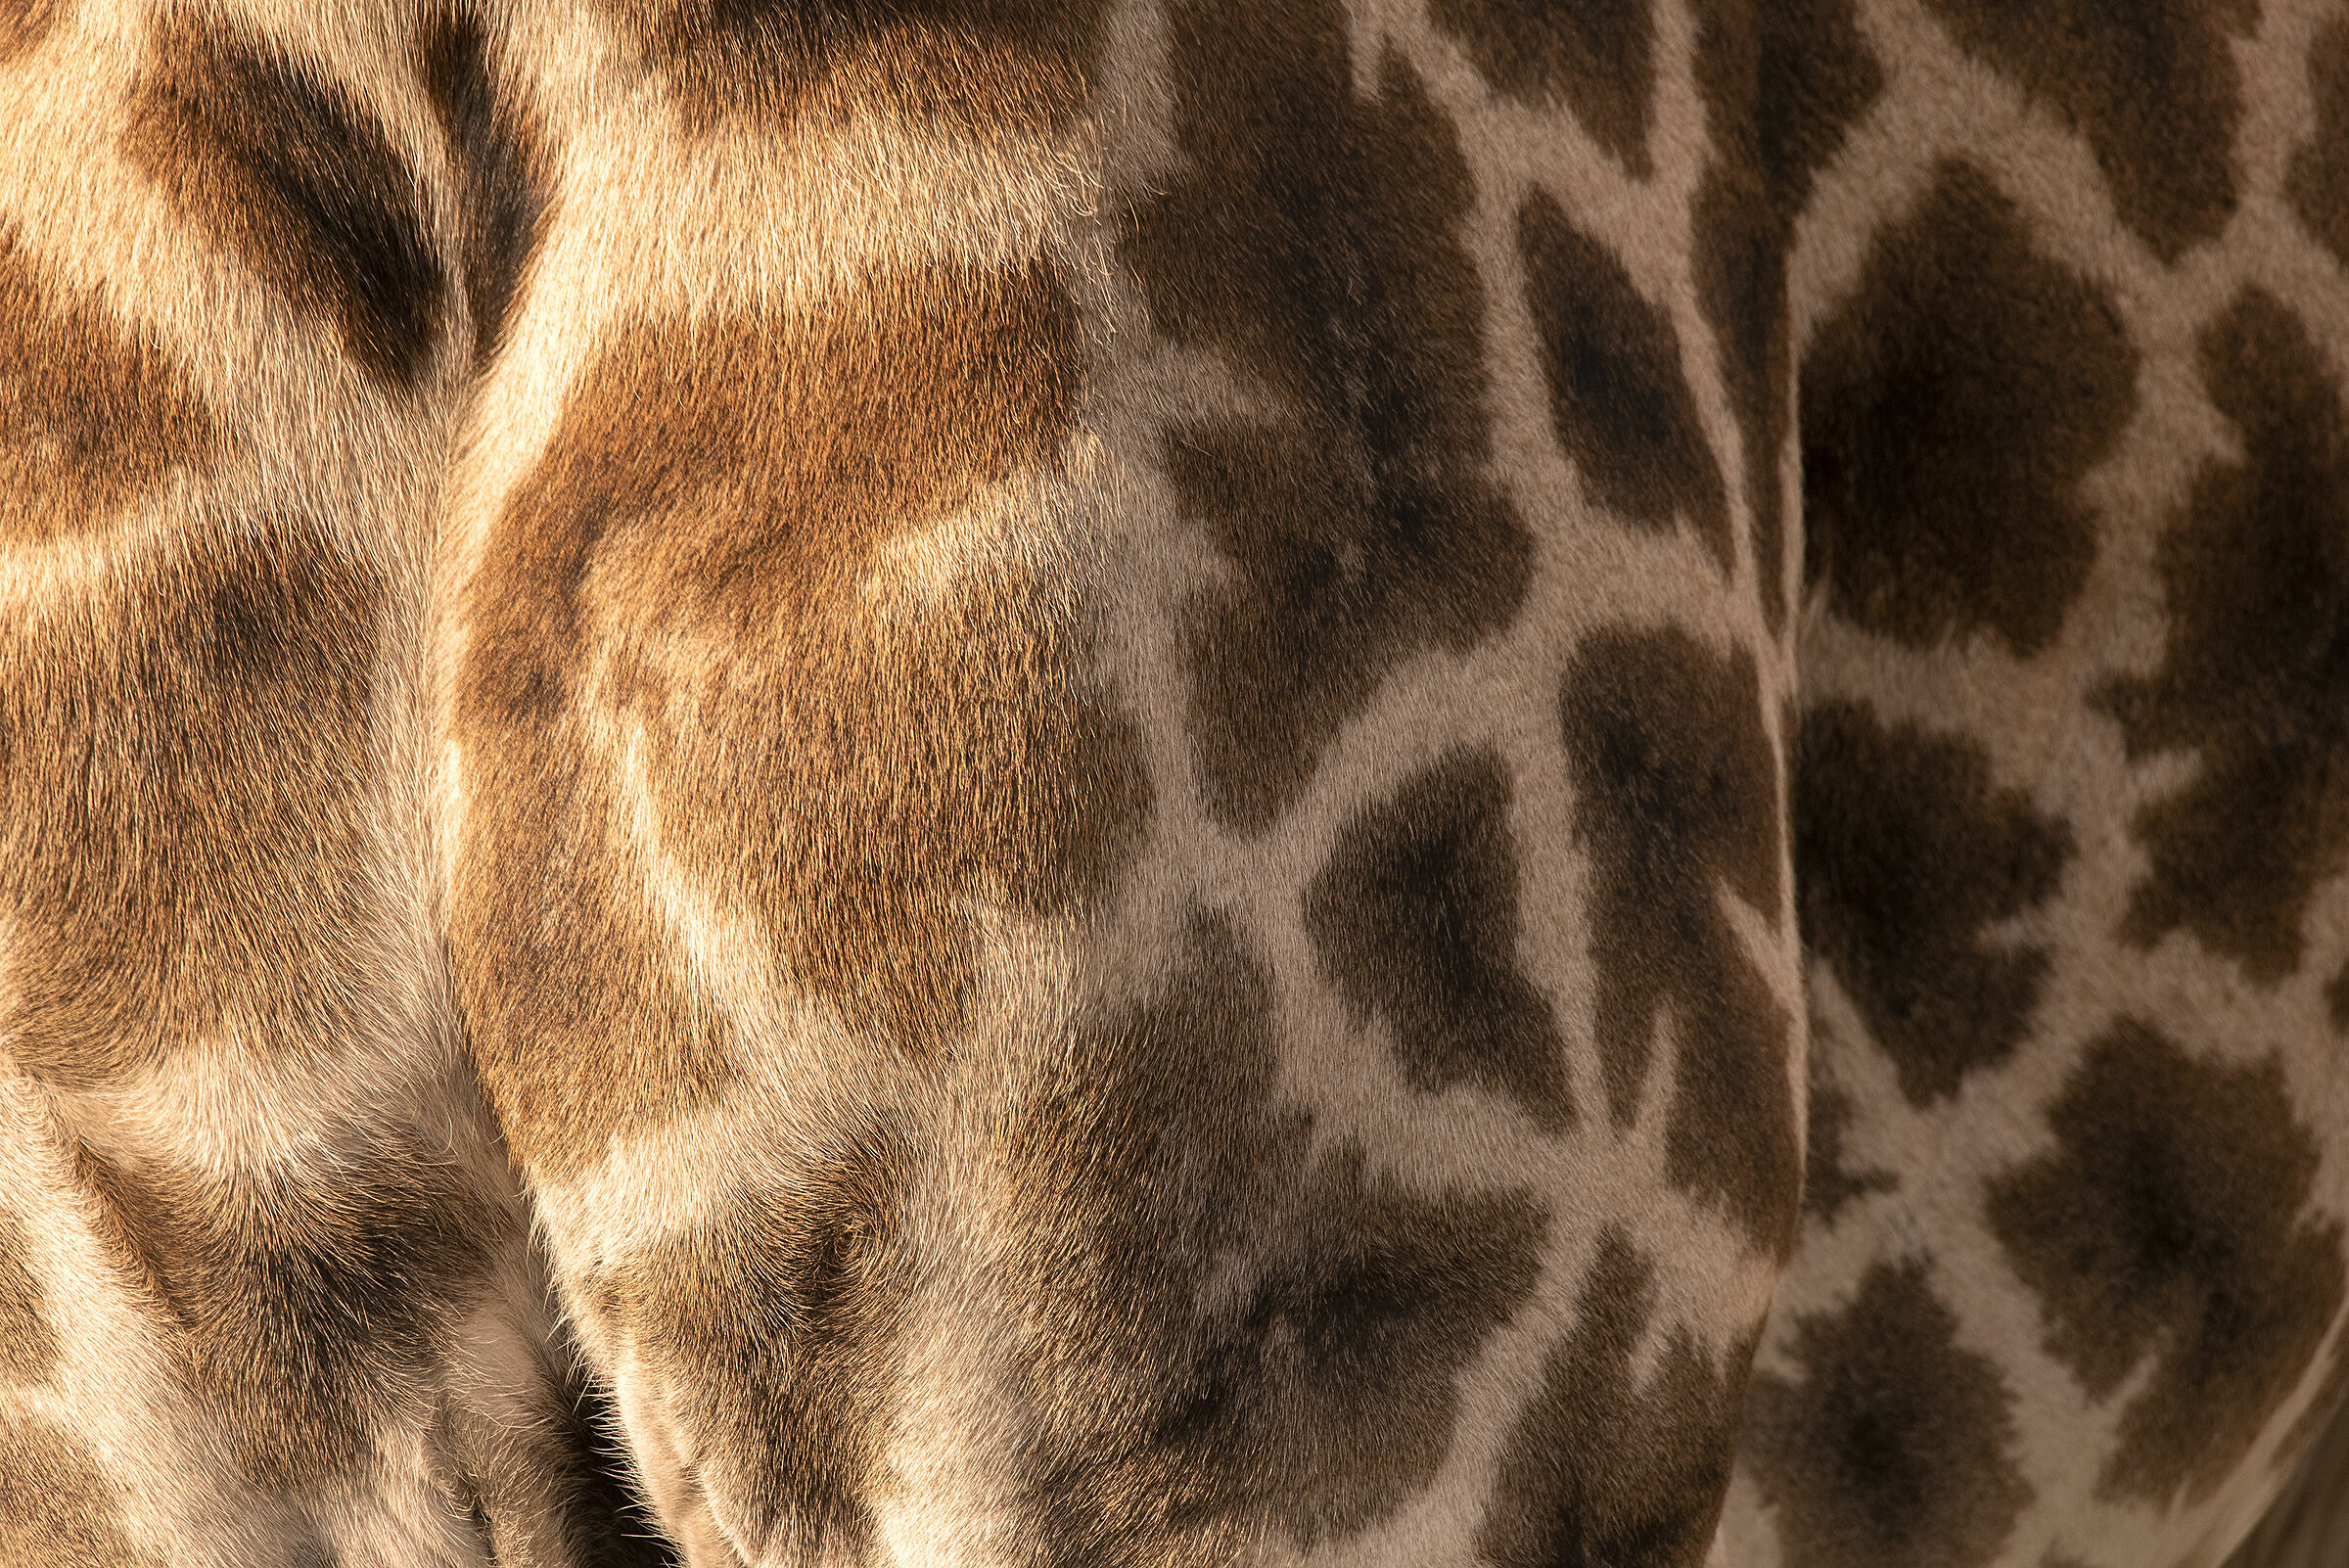 My Africa Ep. 2: The Giraffe...